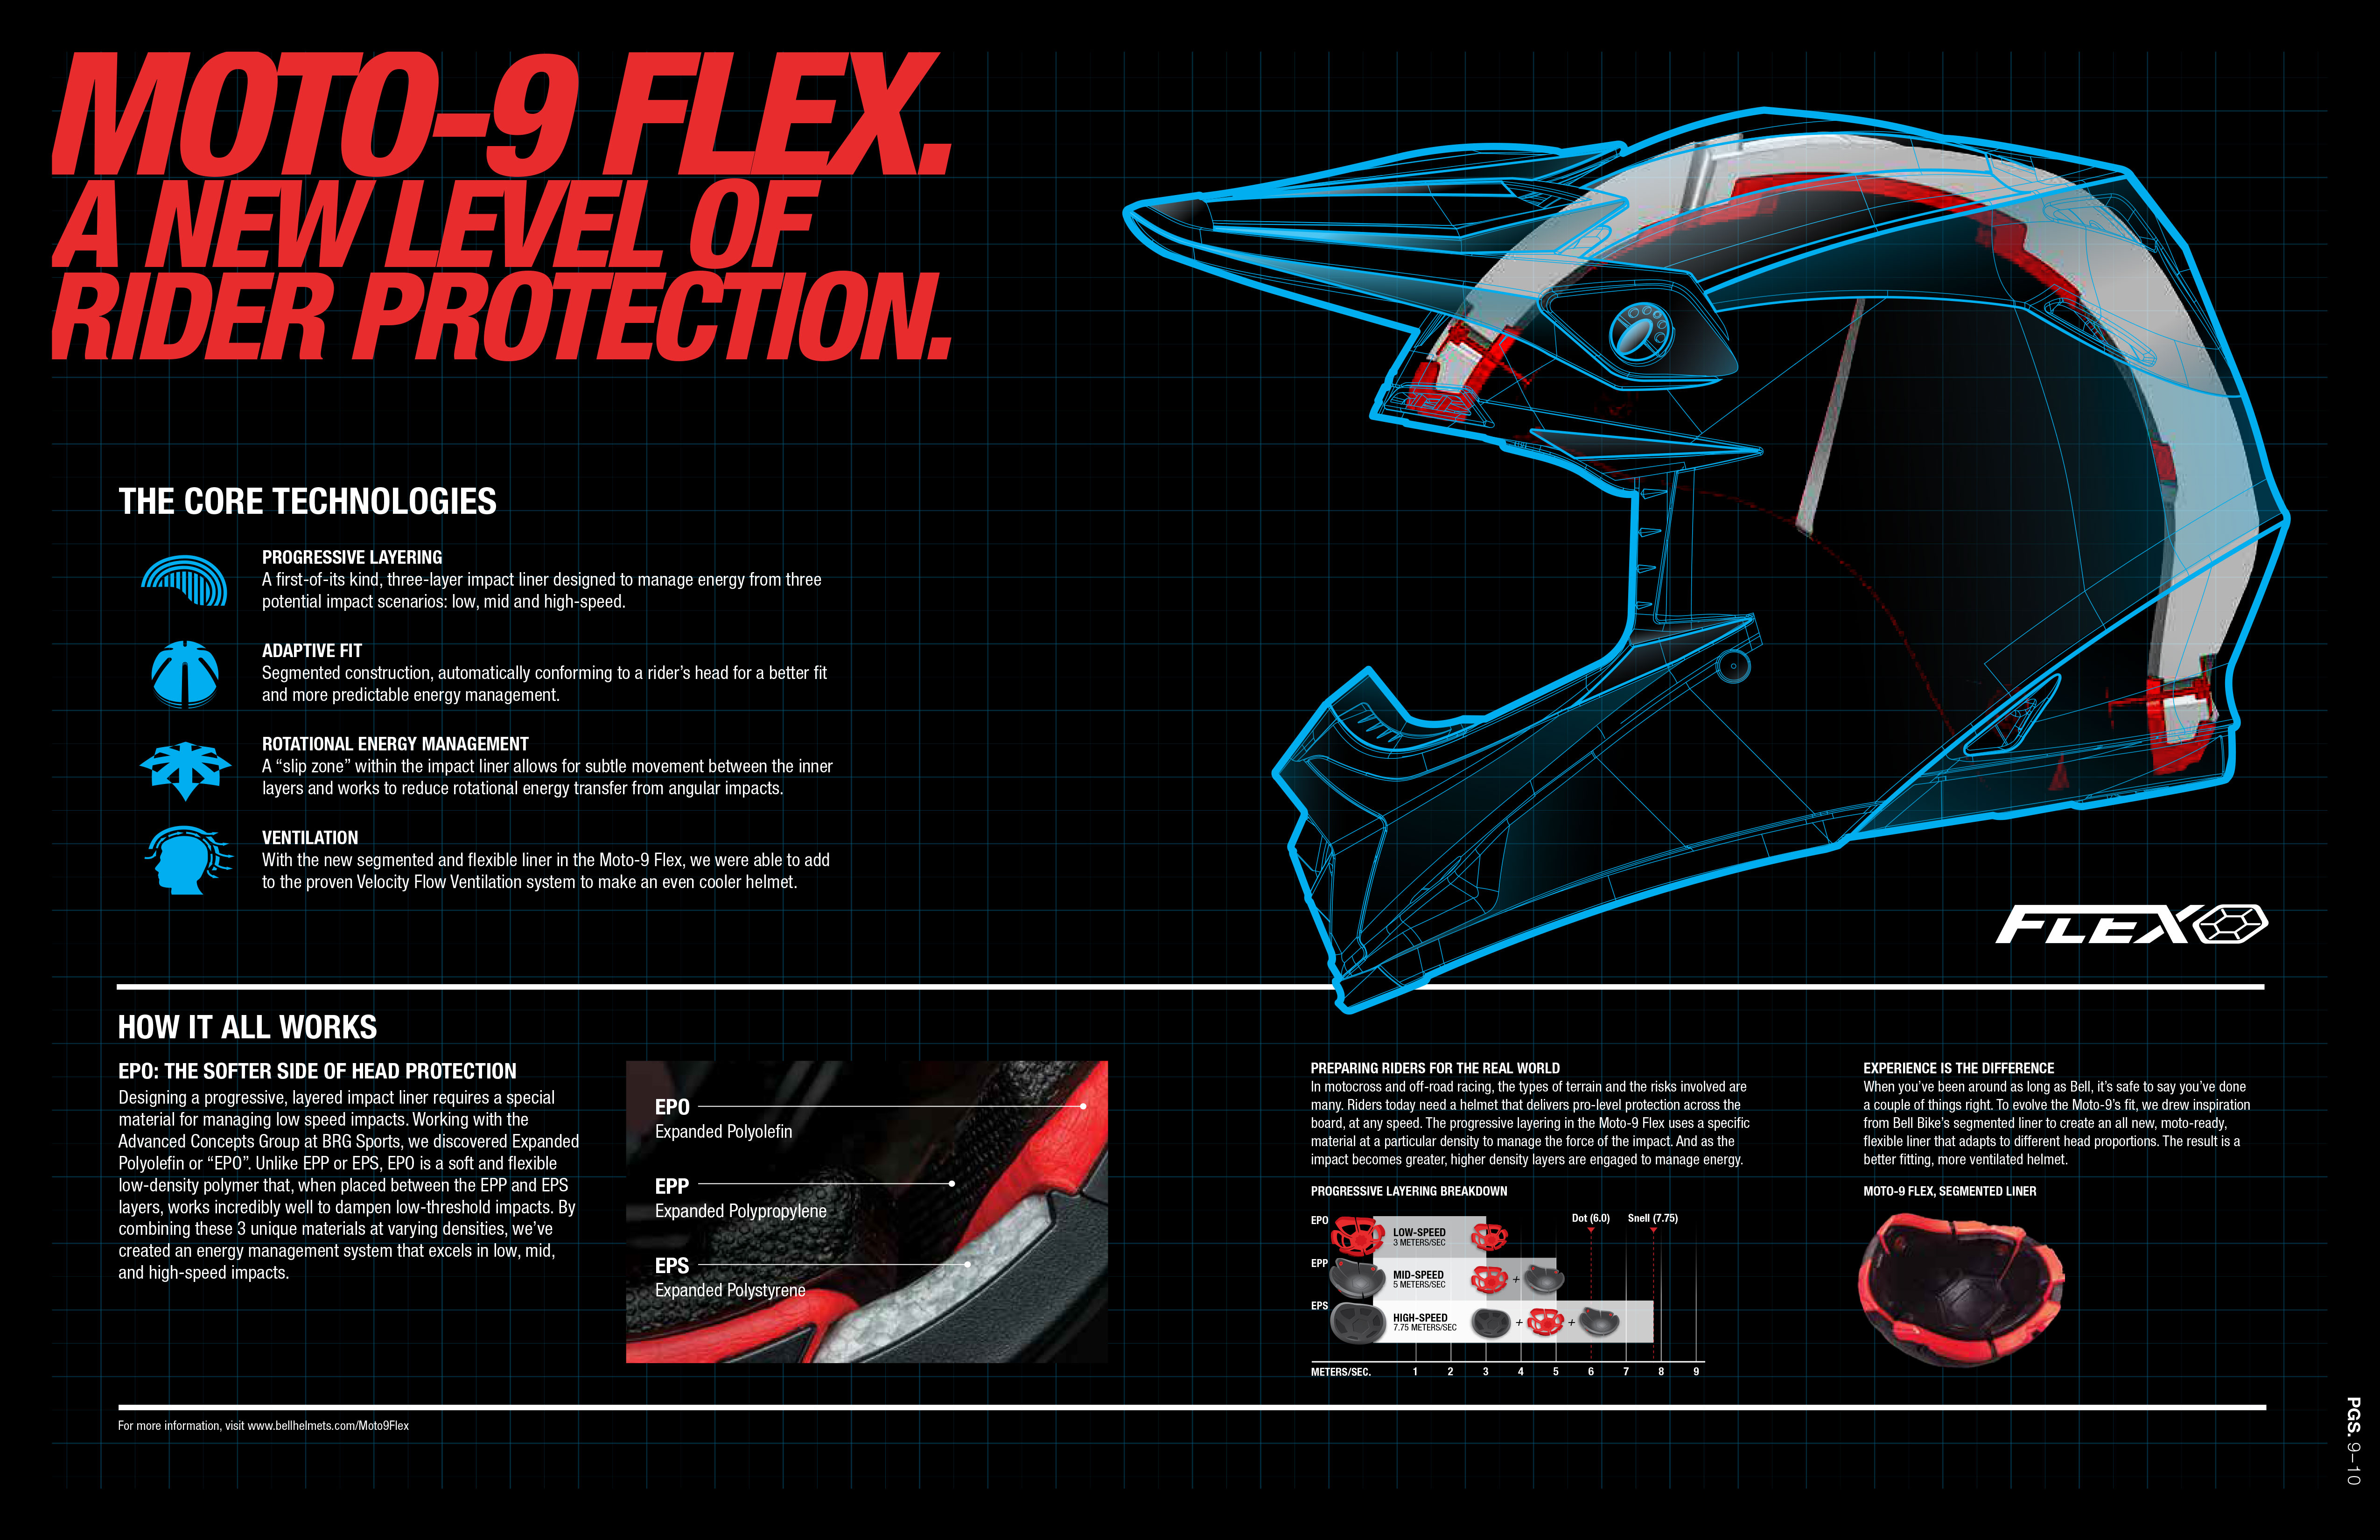 moto-9-flex-information.jpg